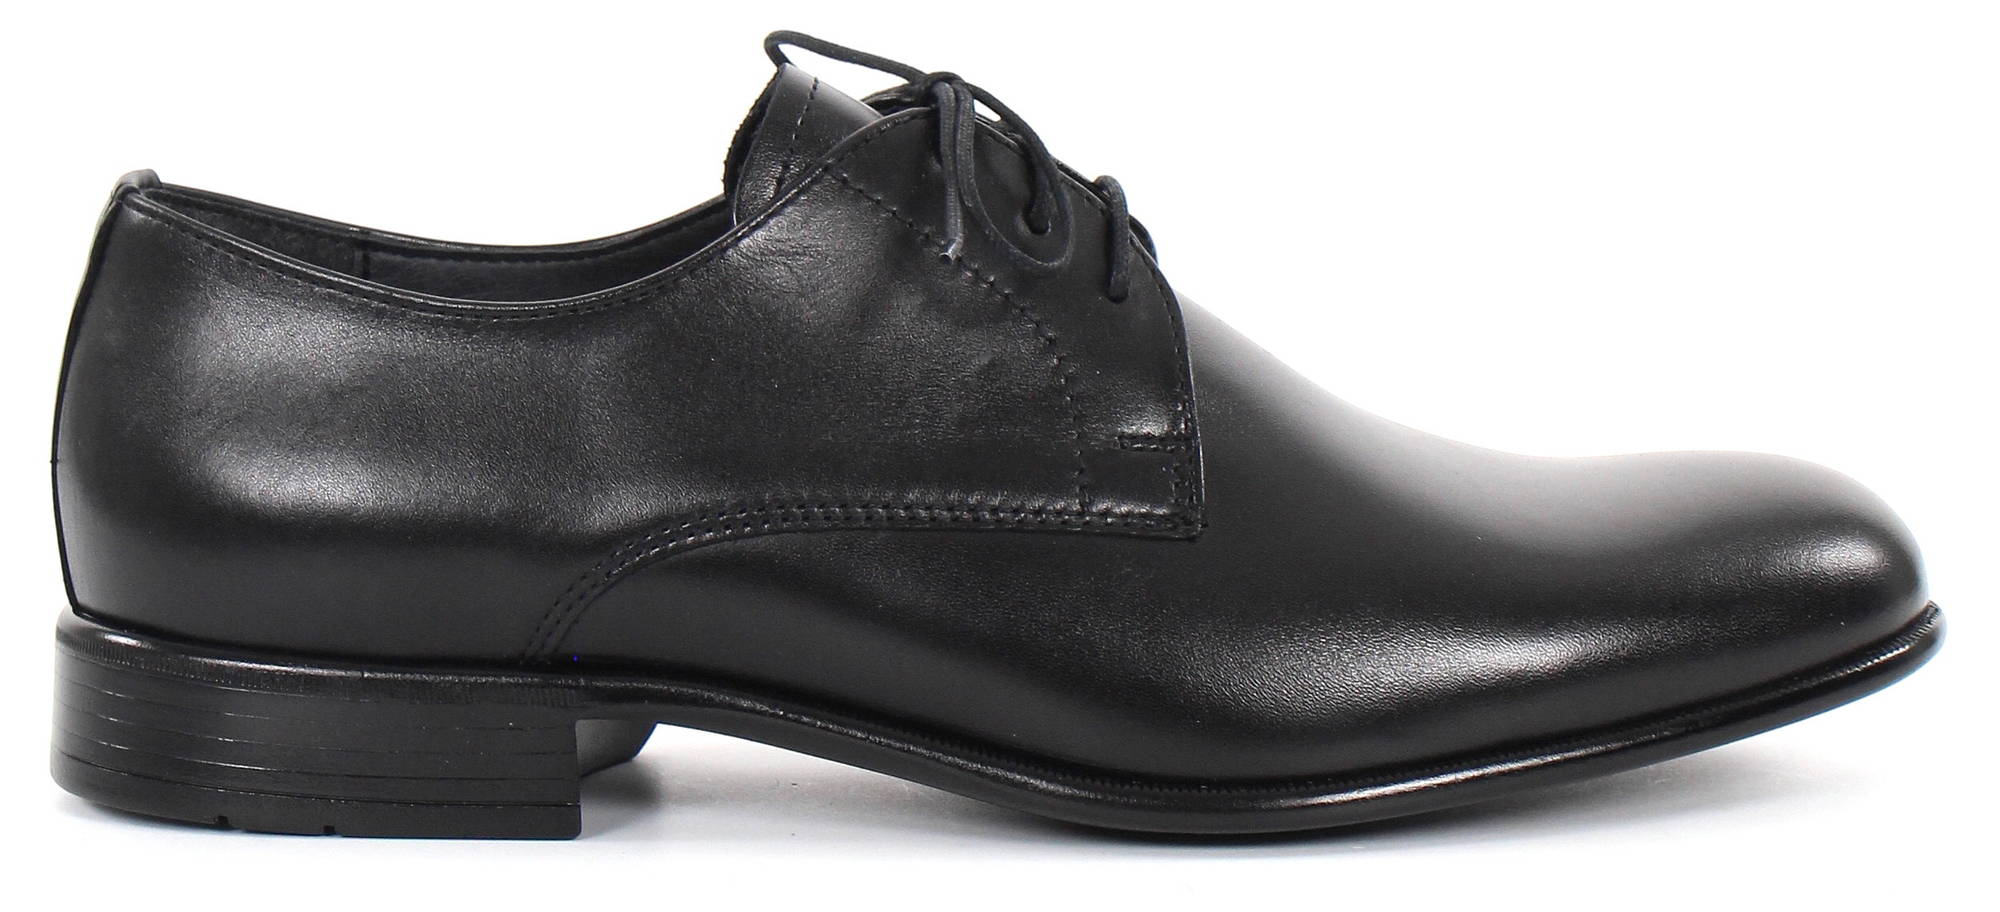 Topman Dress Shoes 10490, Black - Stilettoshop.eu webstore